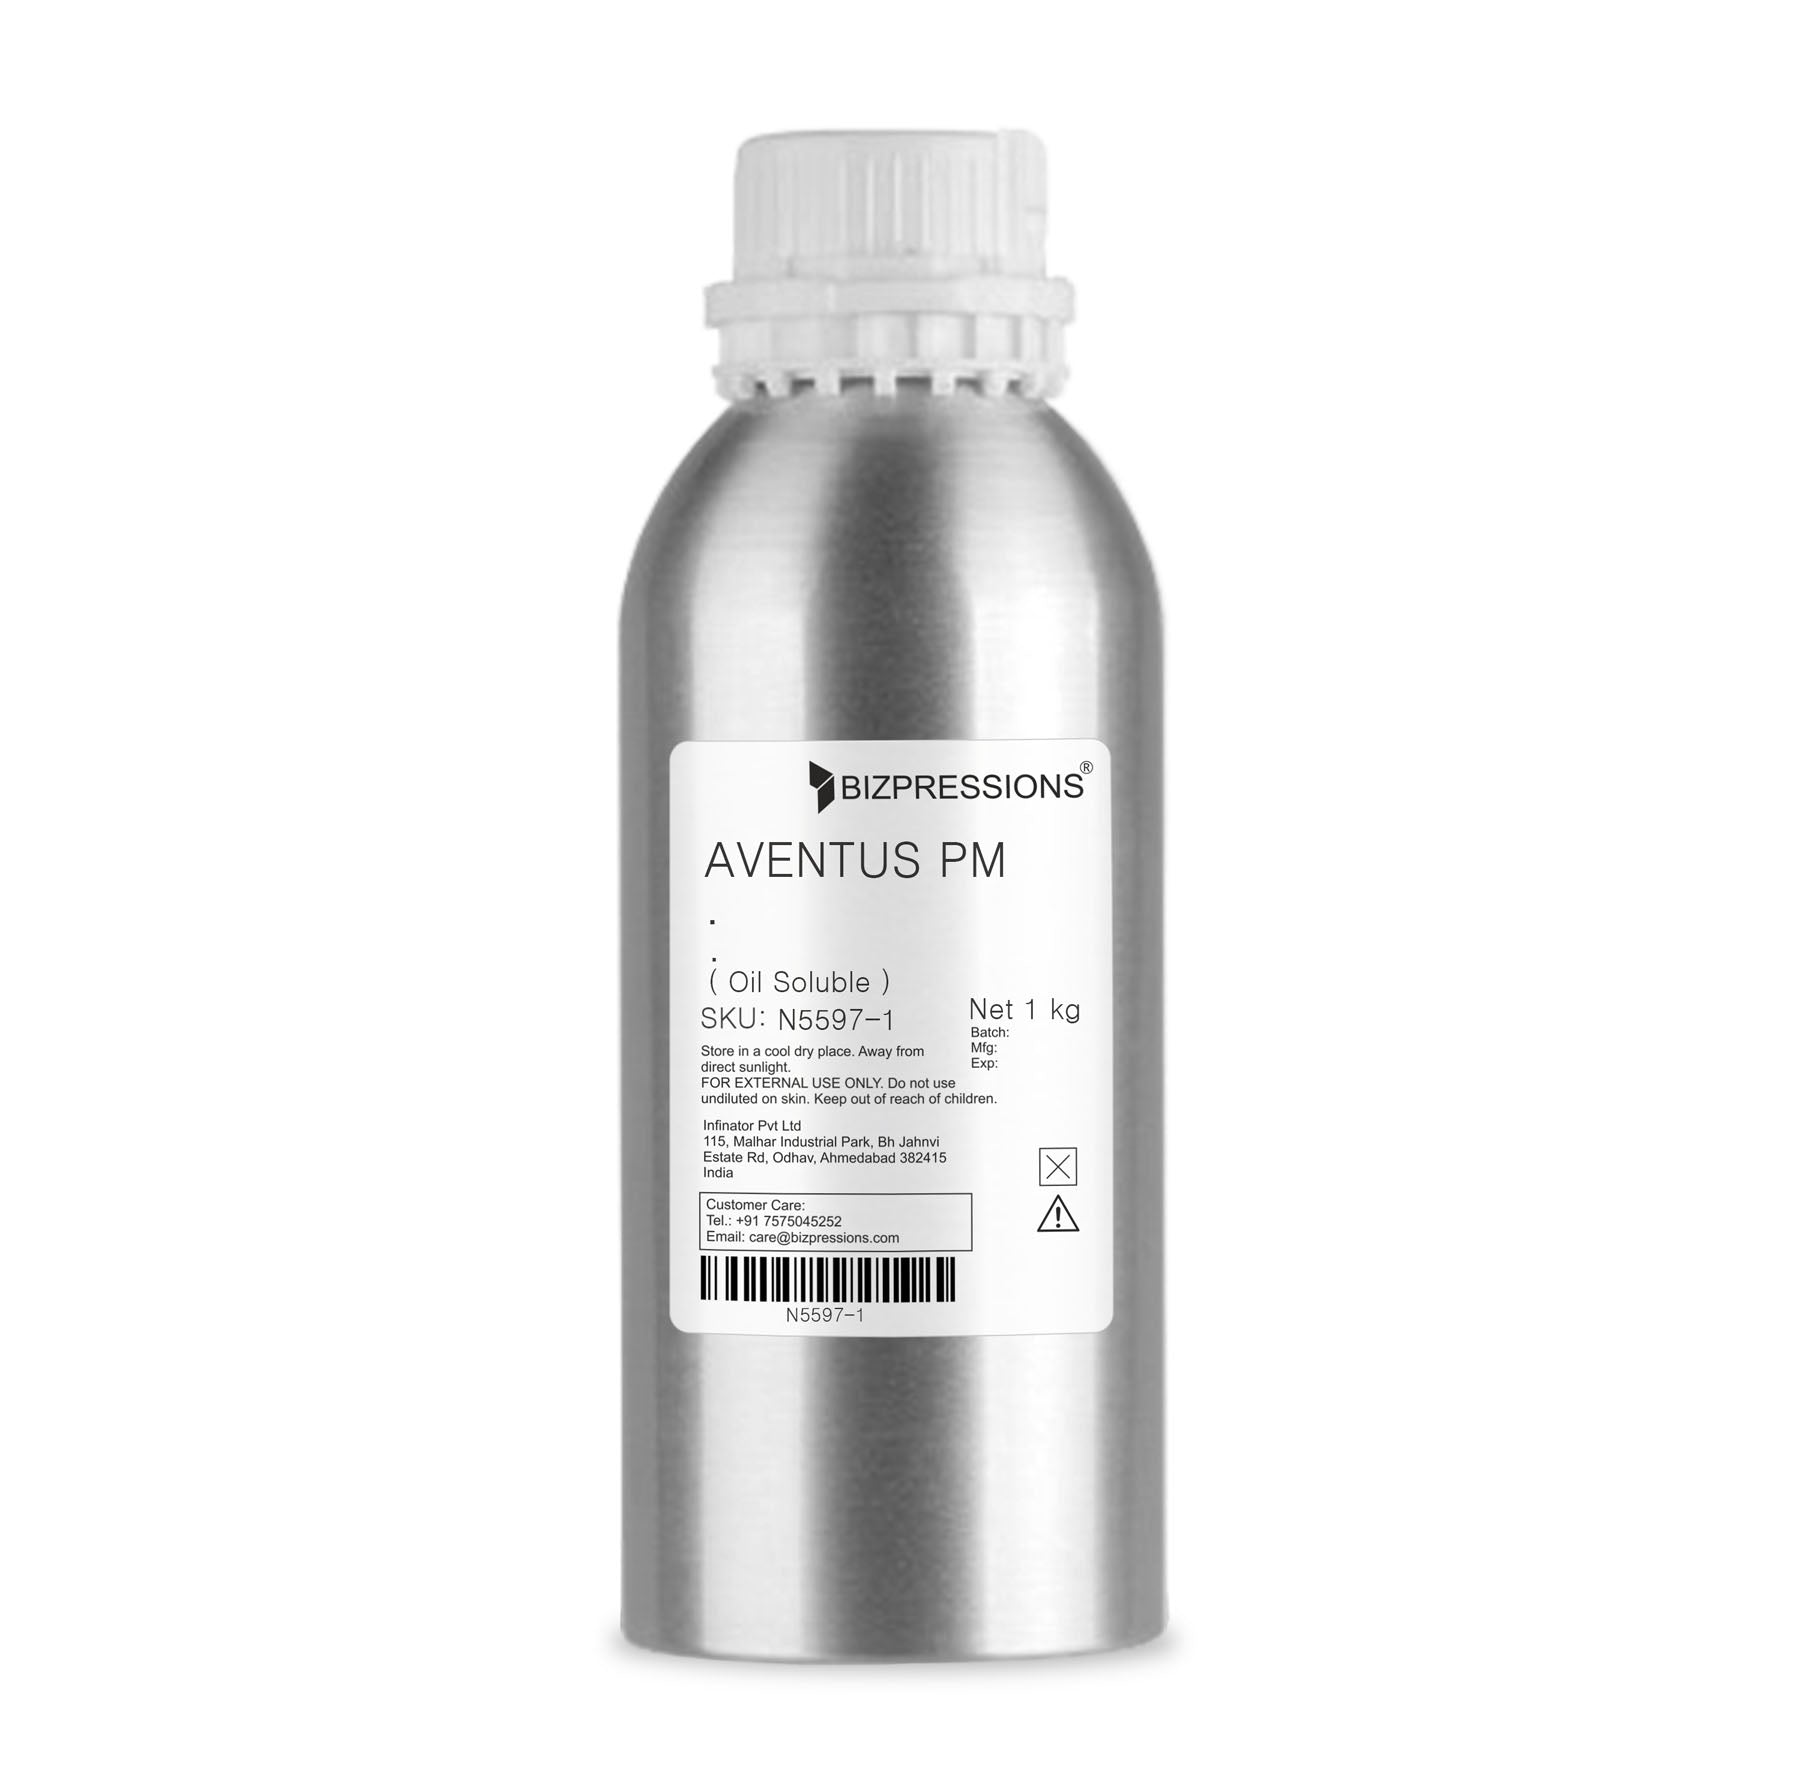 AVENTUS PM - Fragrance ( Oil Soluble ) - 1 kg